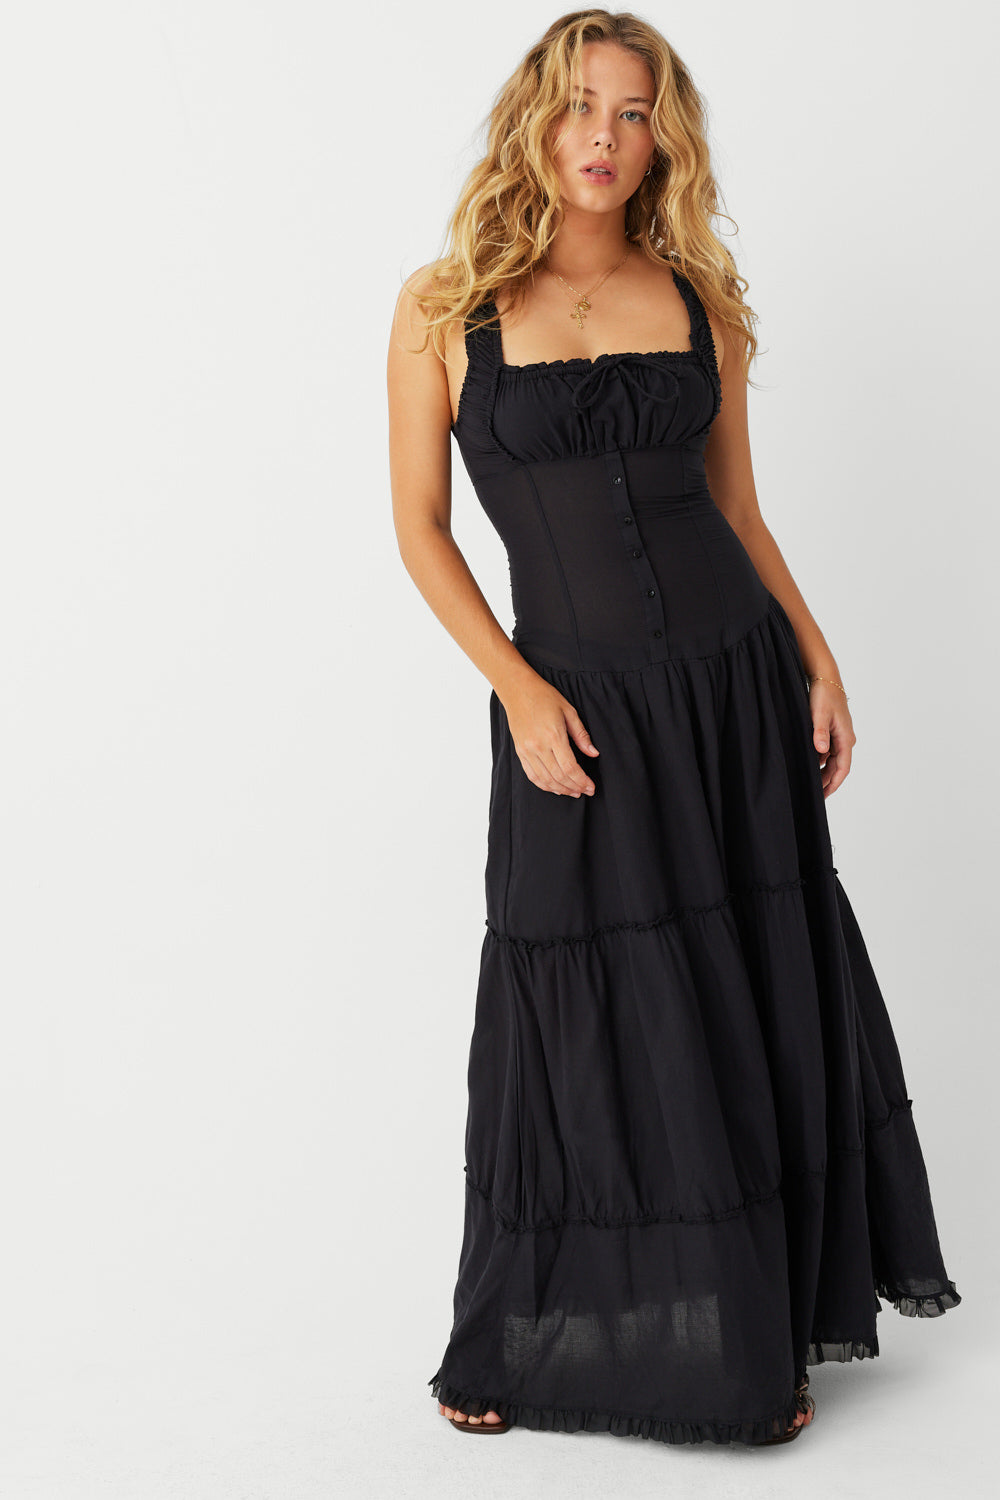 REVIEW Australia Black Fit & Flare Dress with Back Cut-Out - Size AU 8